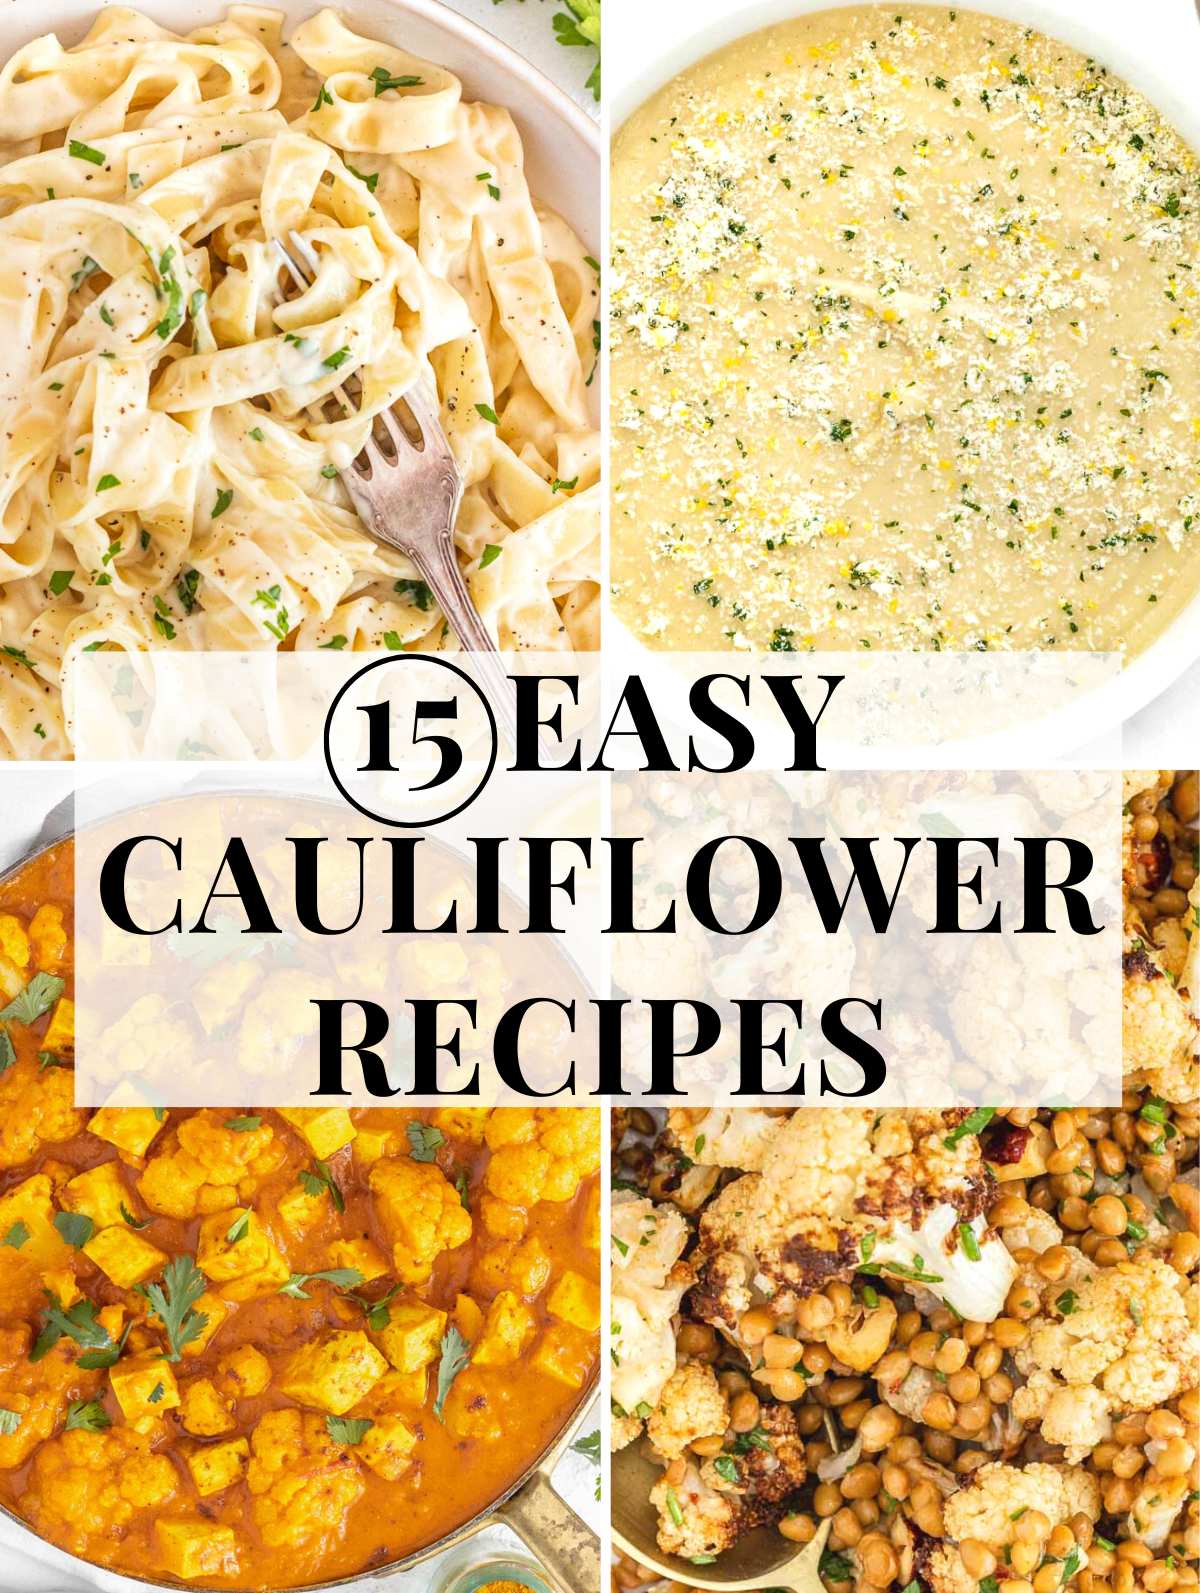 Quick and easy cauliflower recipes